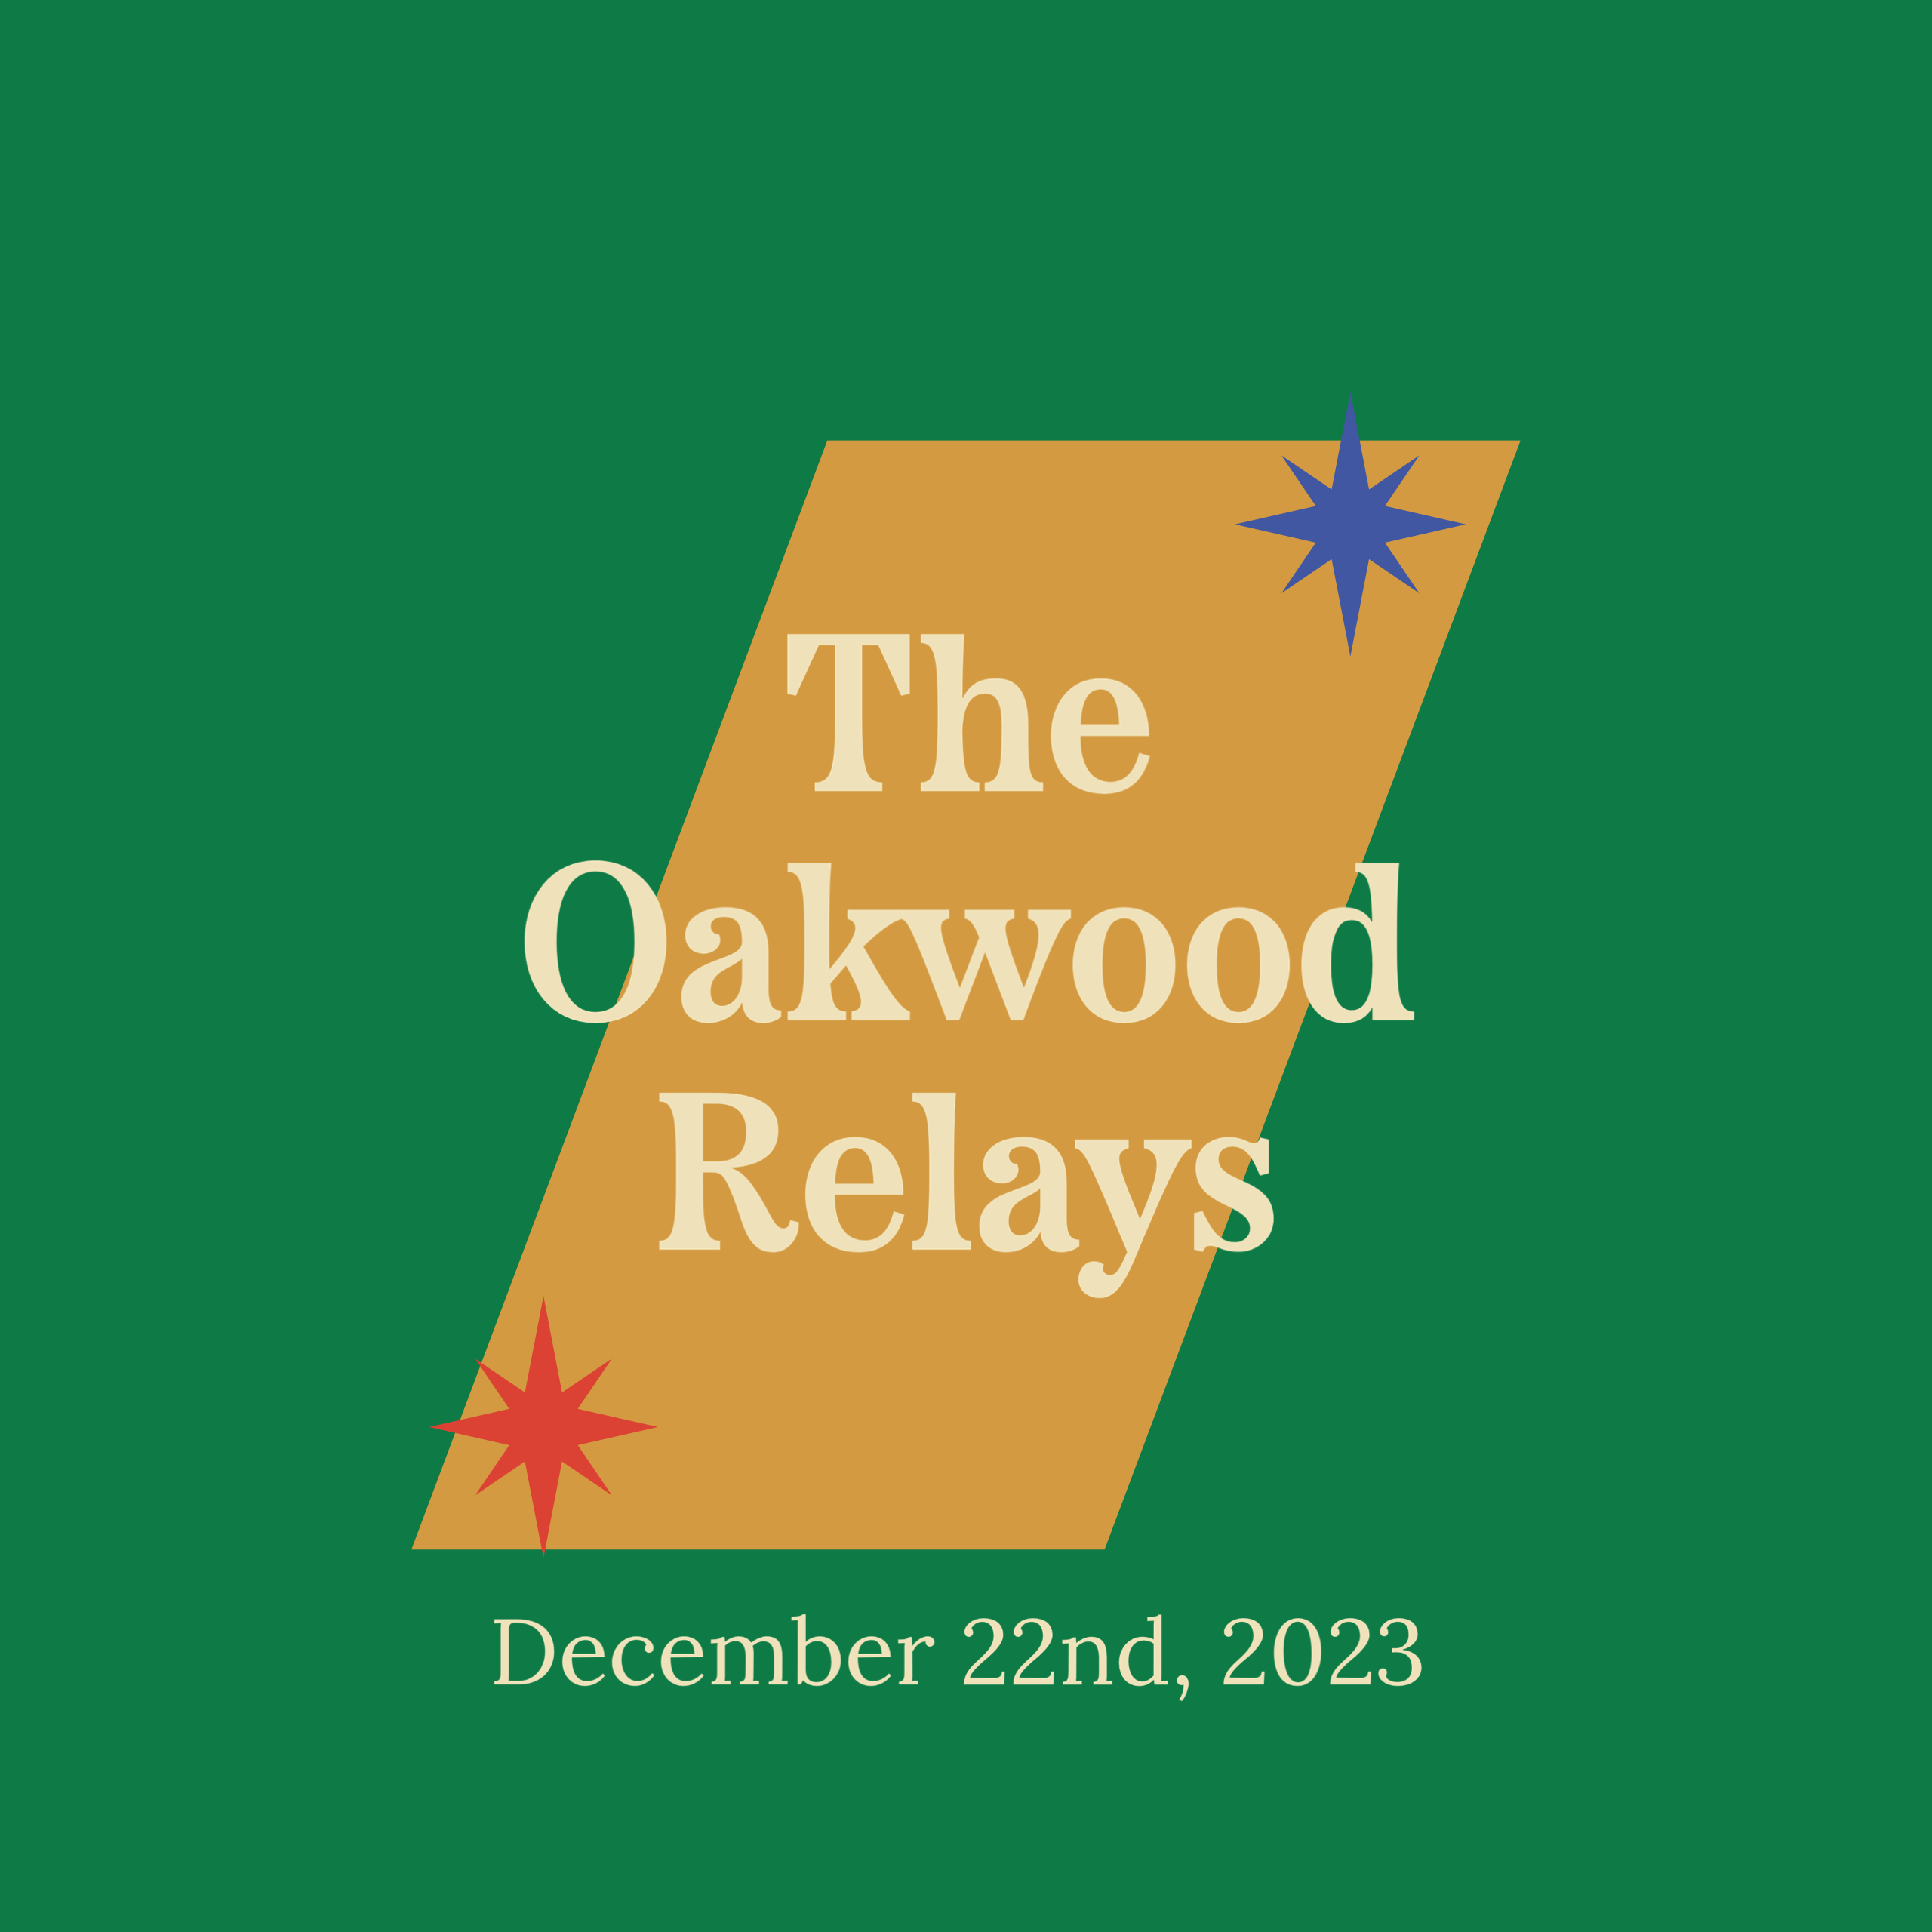 The Oakwood Relays